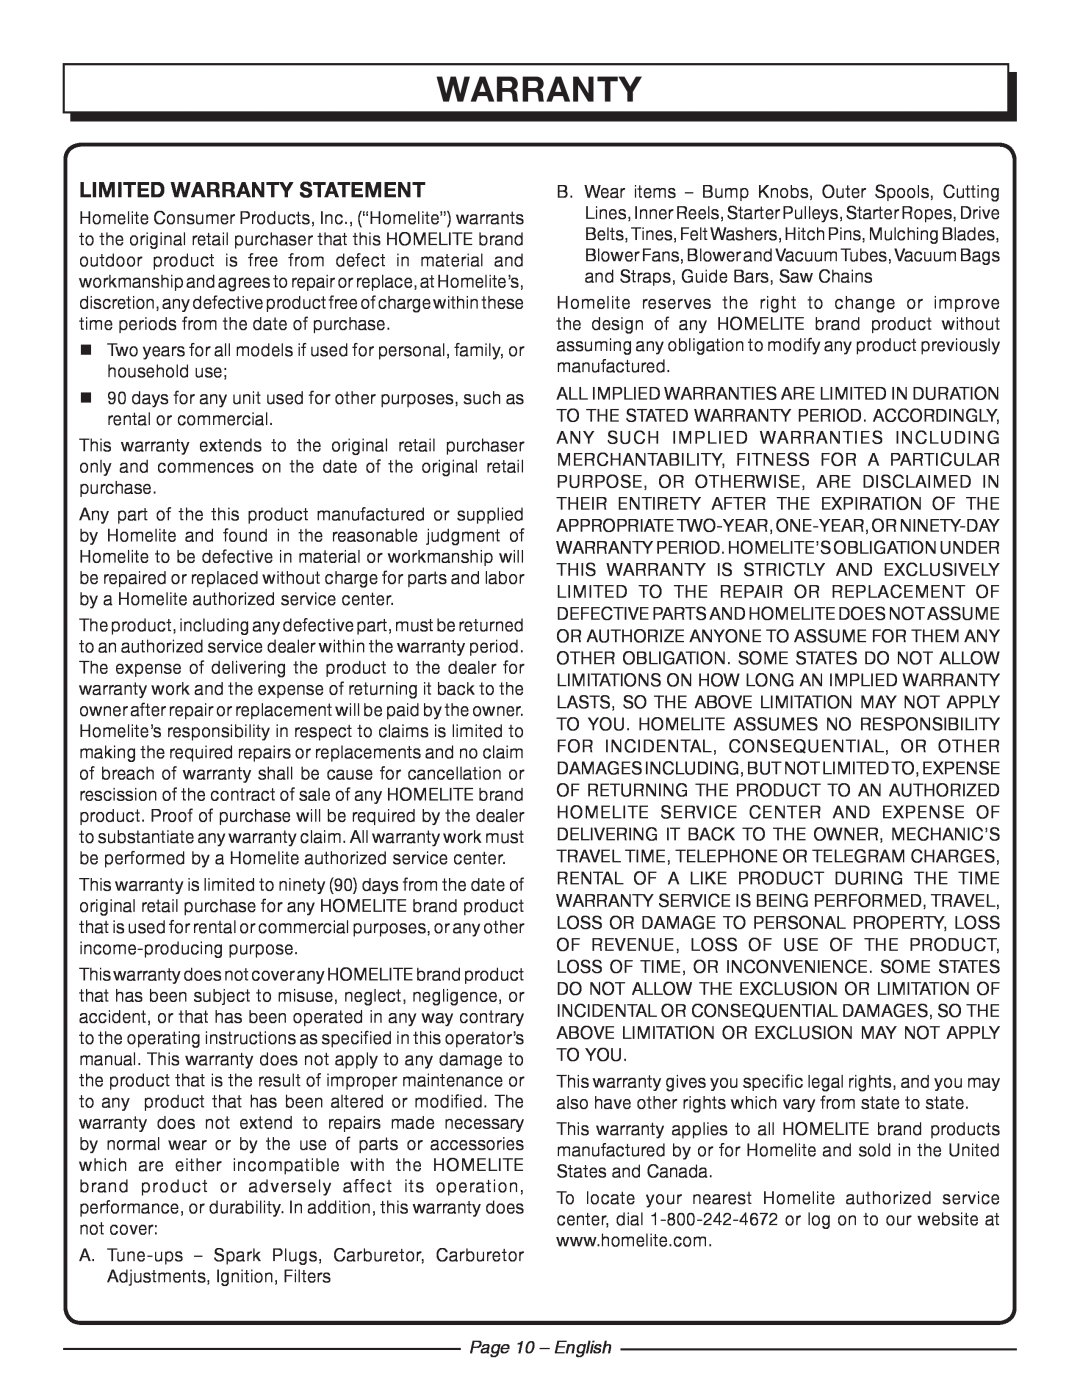 Homelite UT42100 manuel dutilisation Limited Warranty Statement, Page 10 - English 